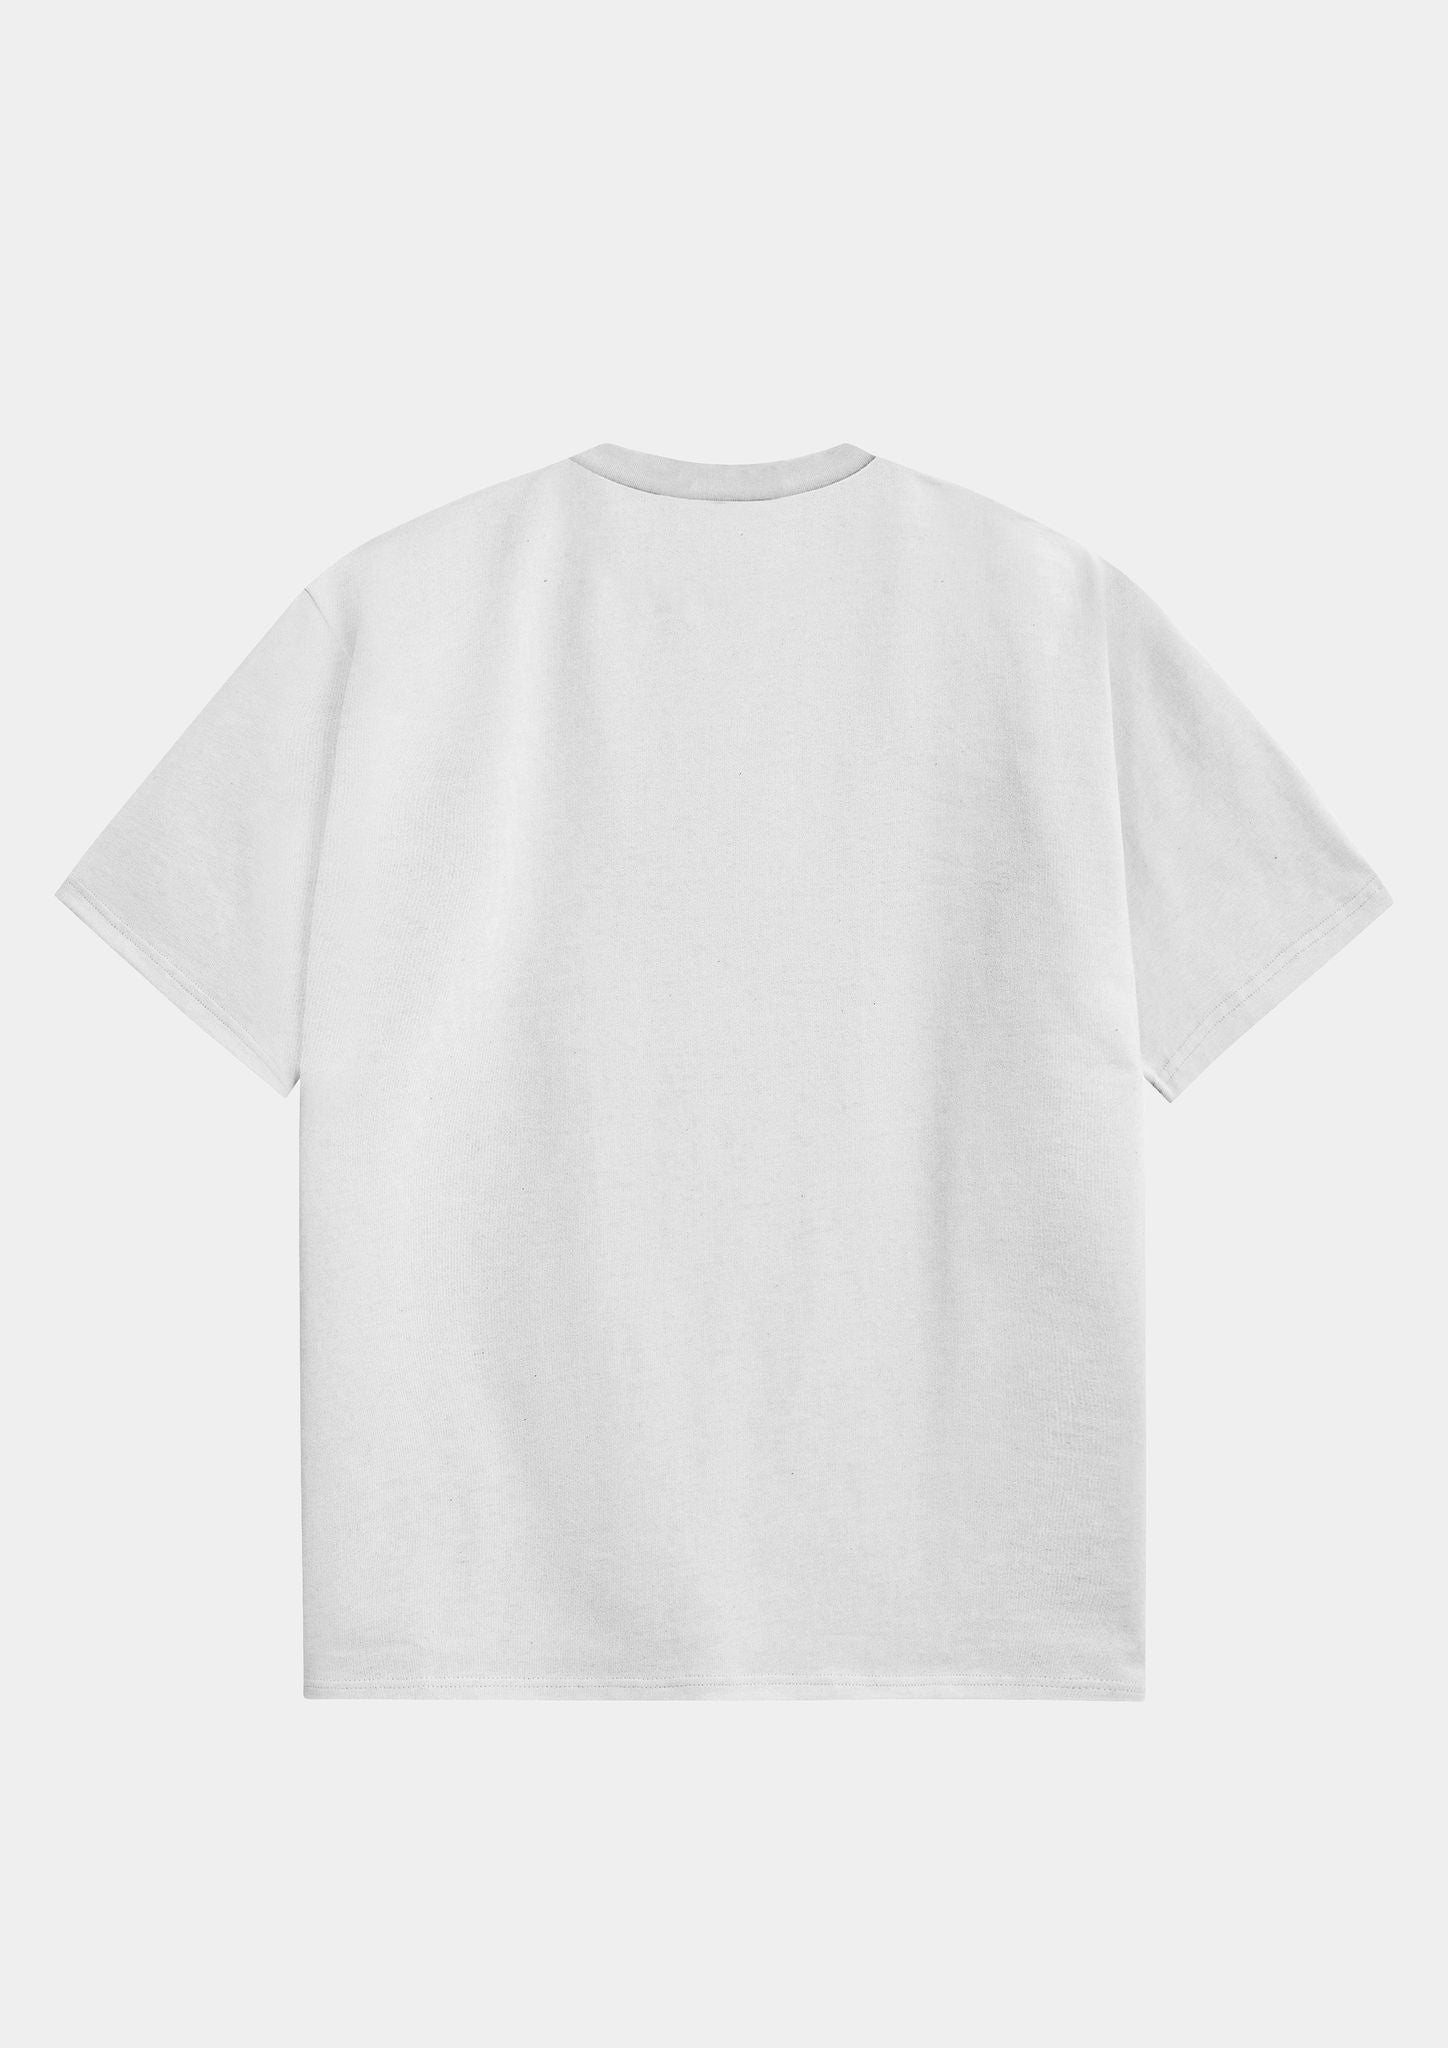 Blank 240GSM Oversized Tee - White - UNEFFECTED STUDIOS® - T - shirt - UNEFFECTED STUDIOS®